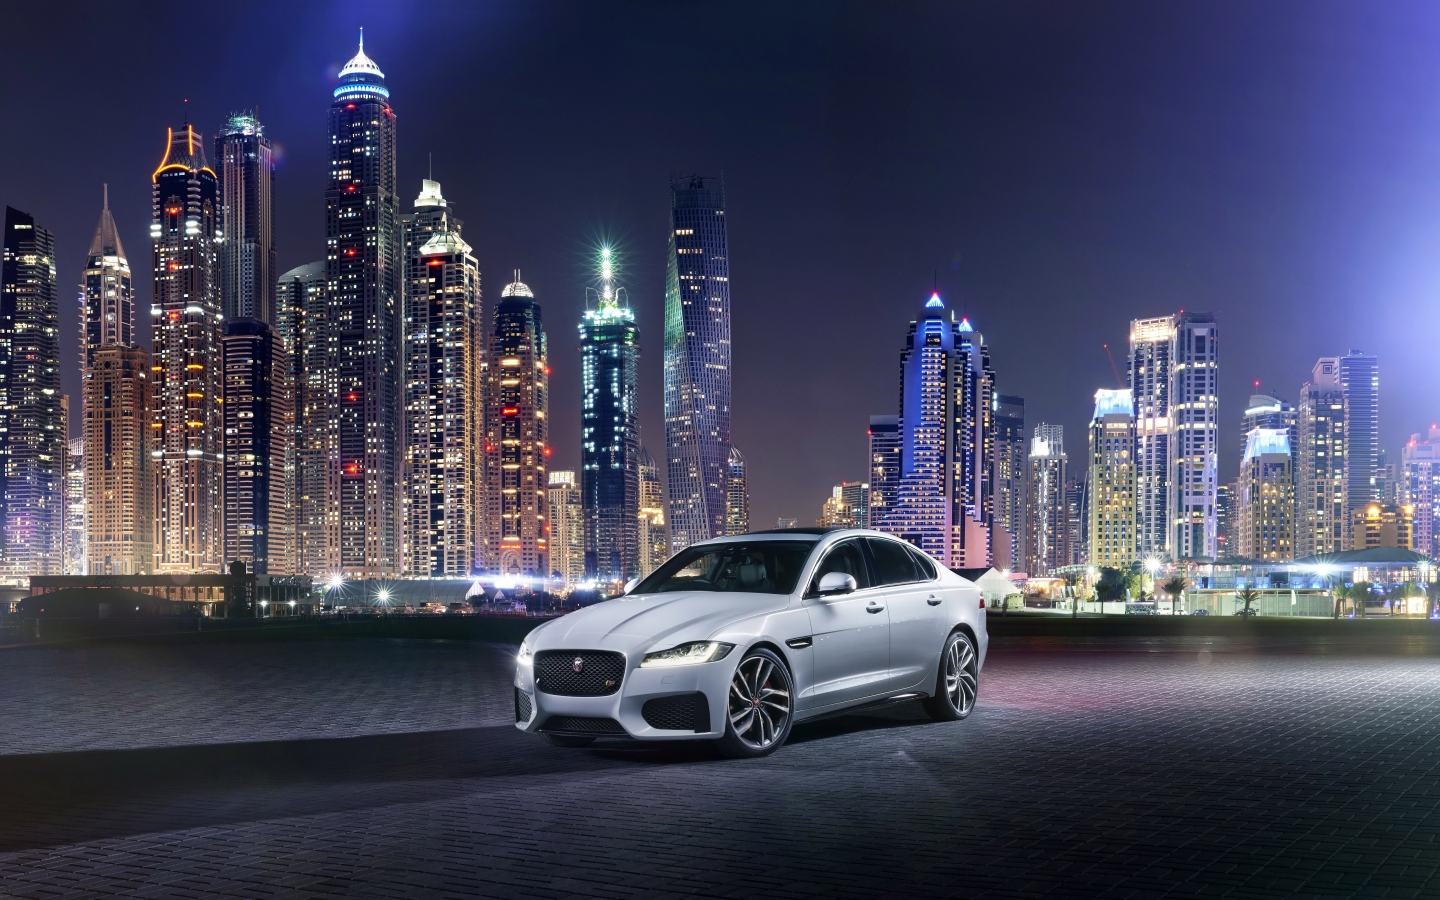 Jaguar XF 2015 for 1440 x 900 widescreen resolution